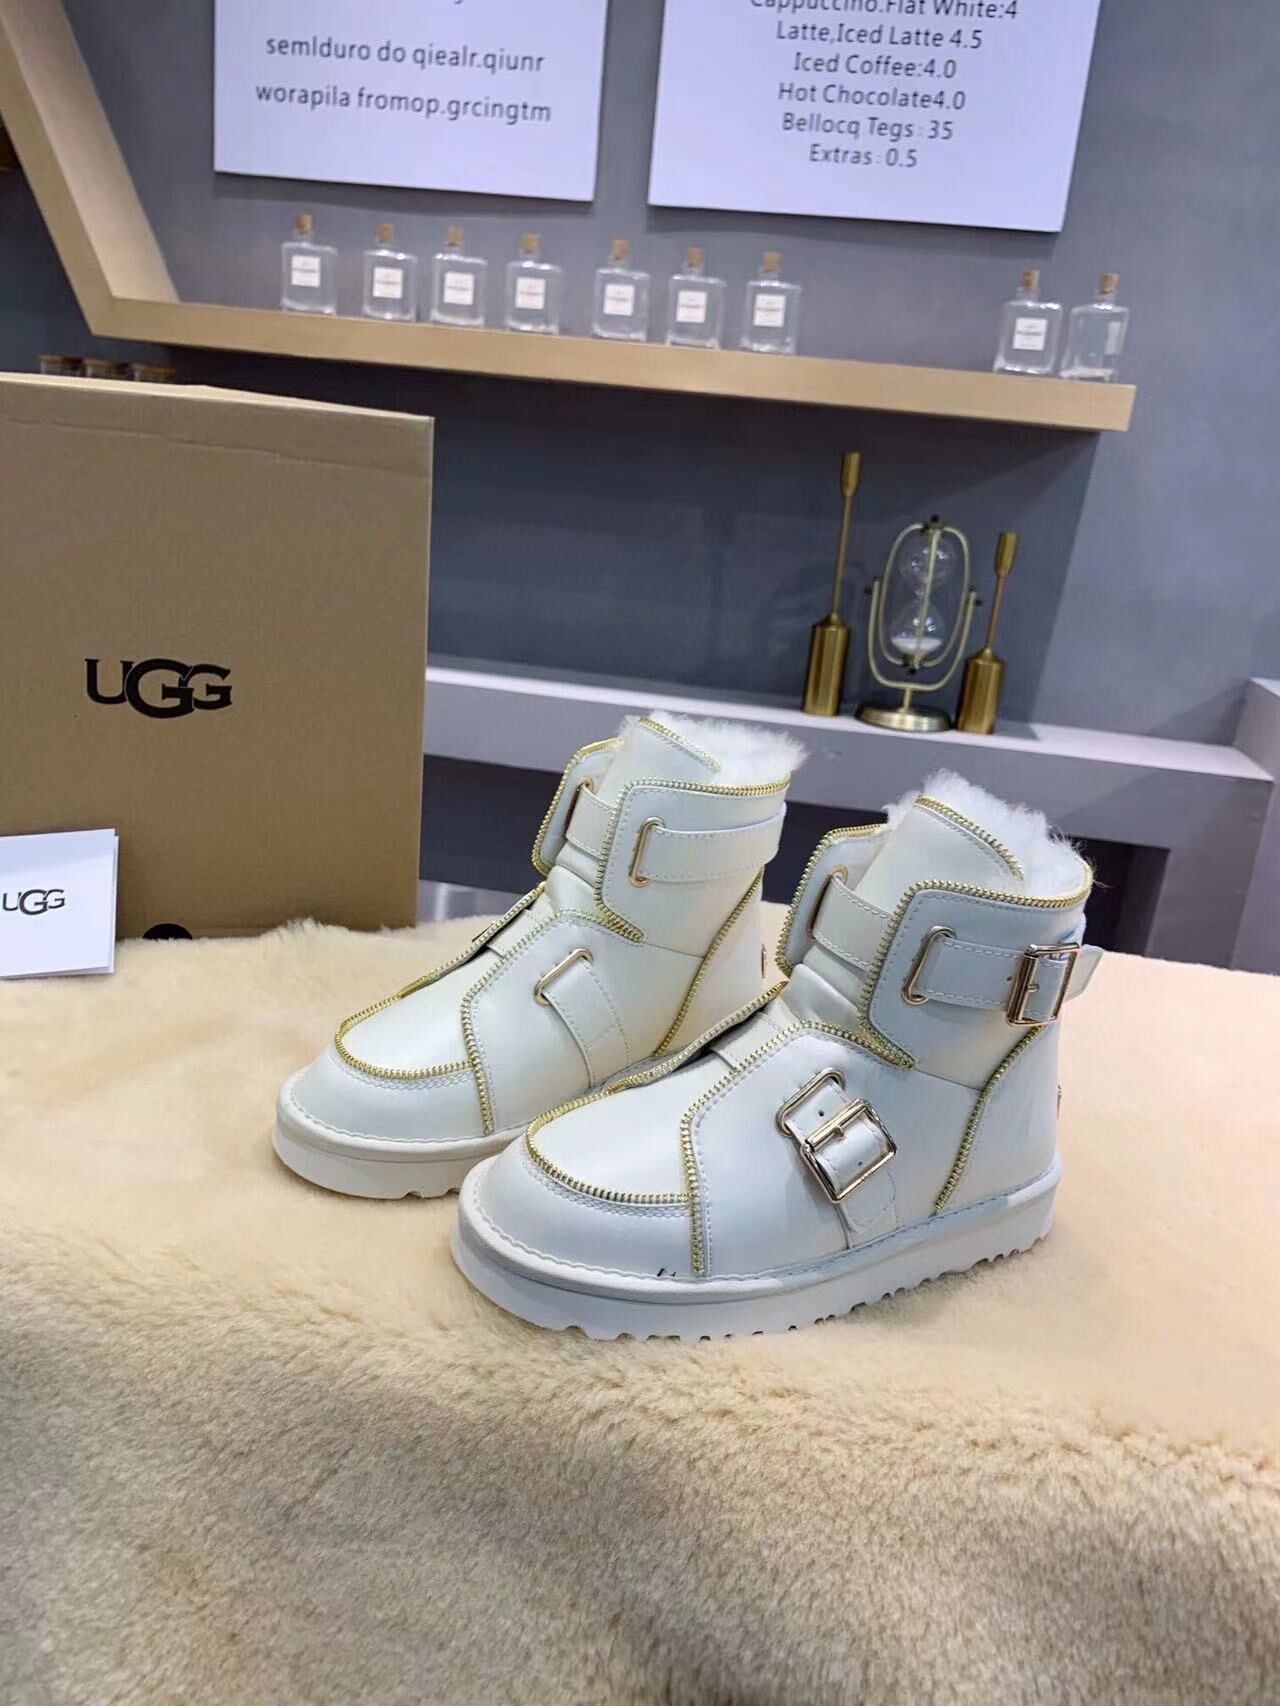 UGG Locomotive Boots Original Leather Full Wool Shoes UGG10361 White